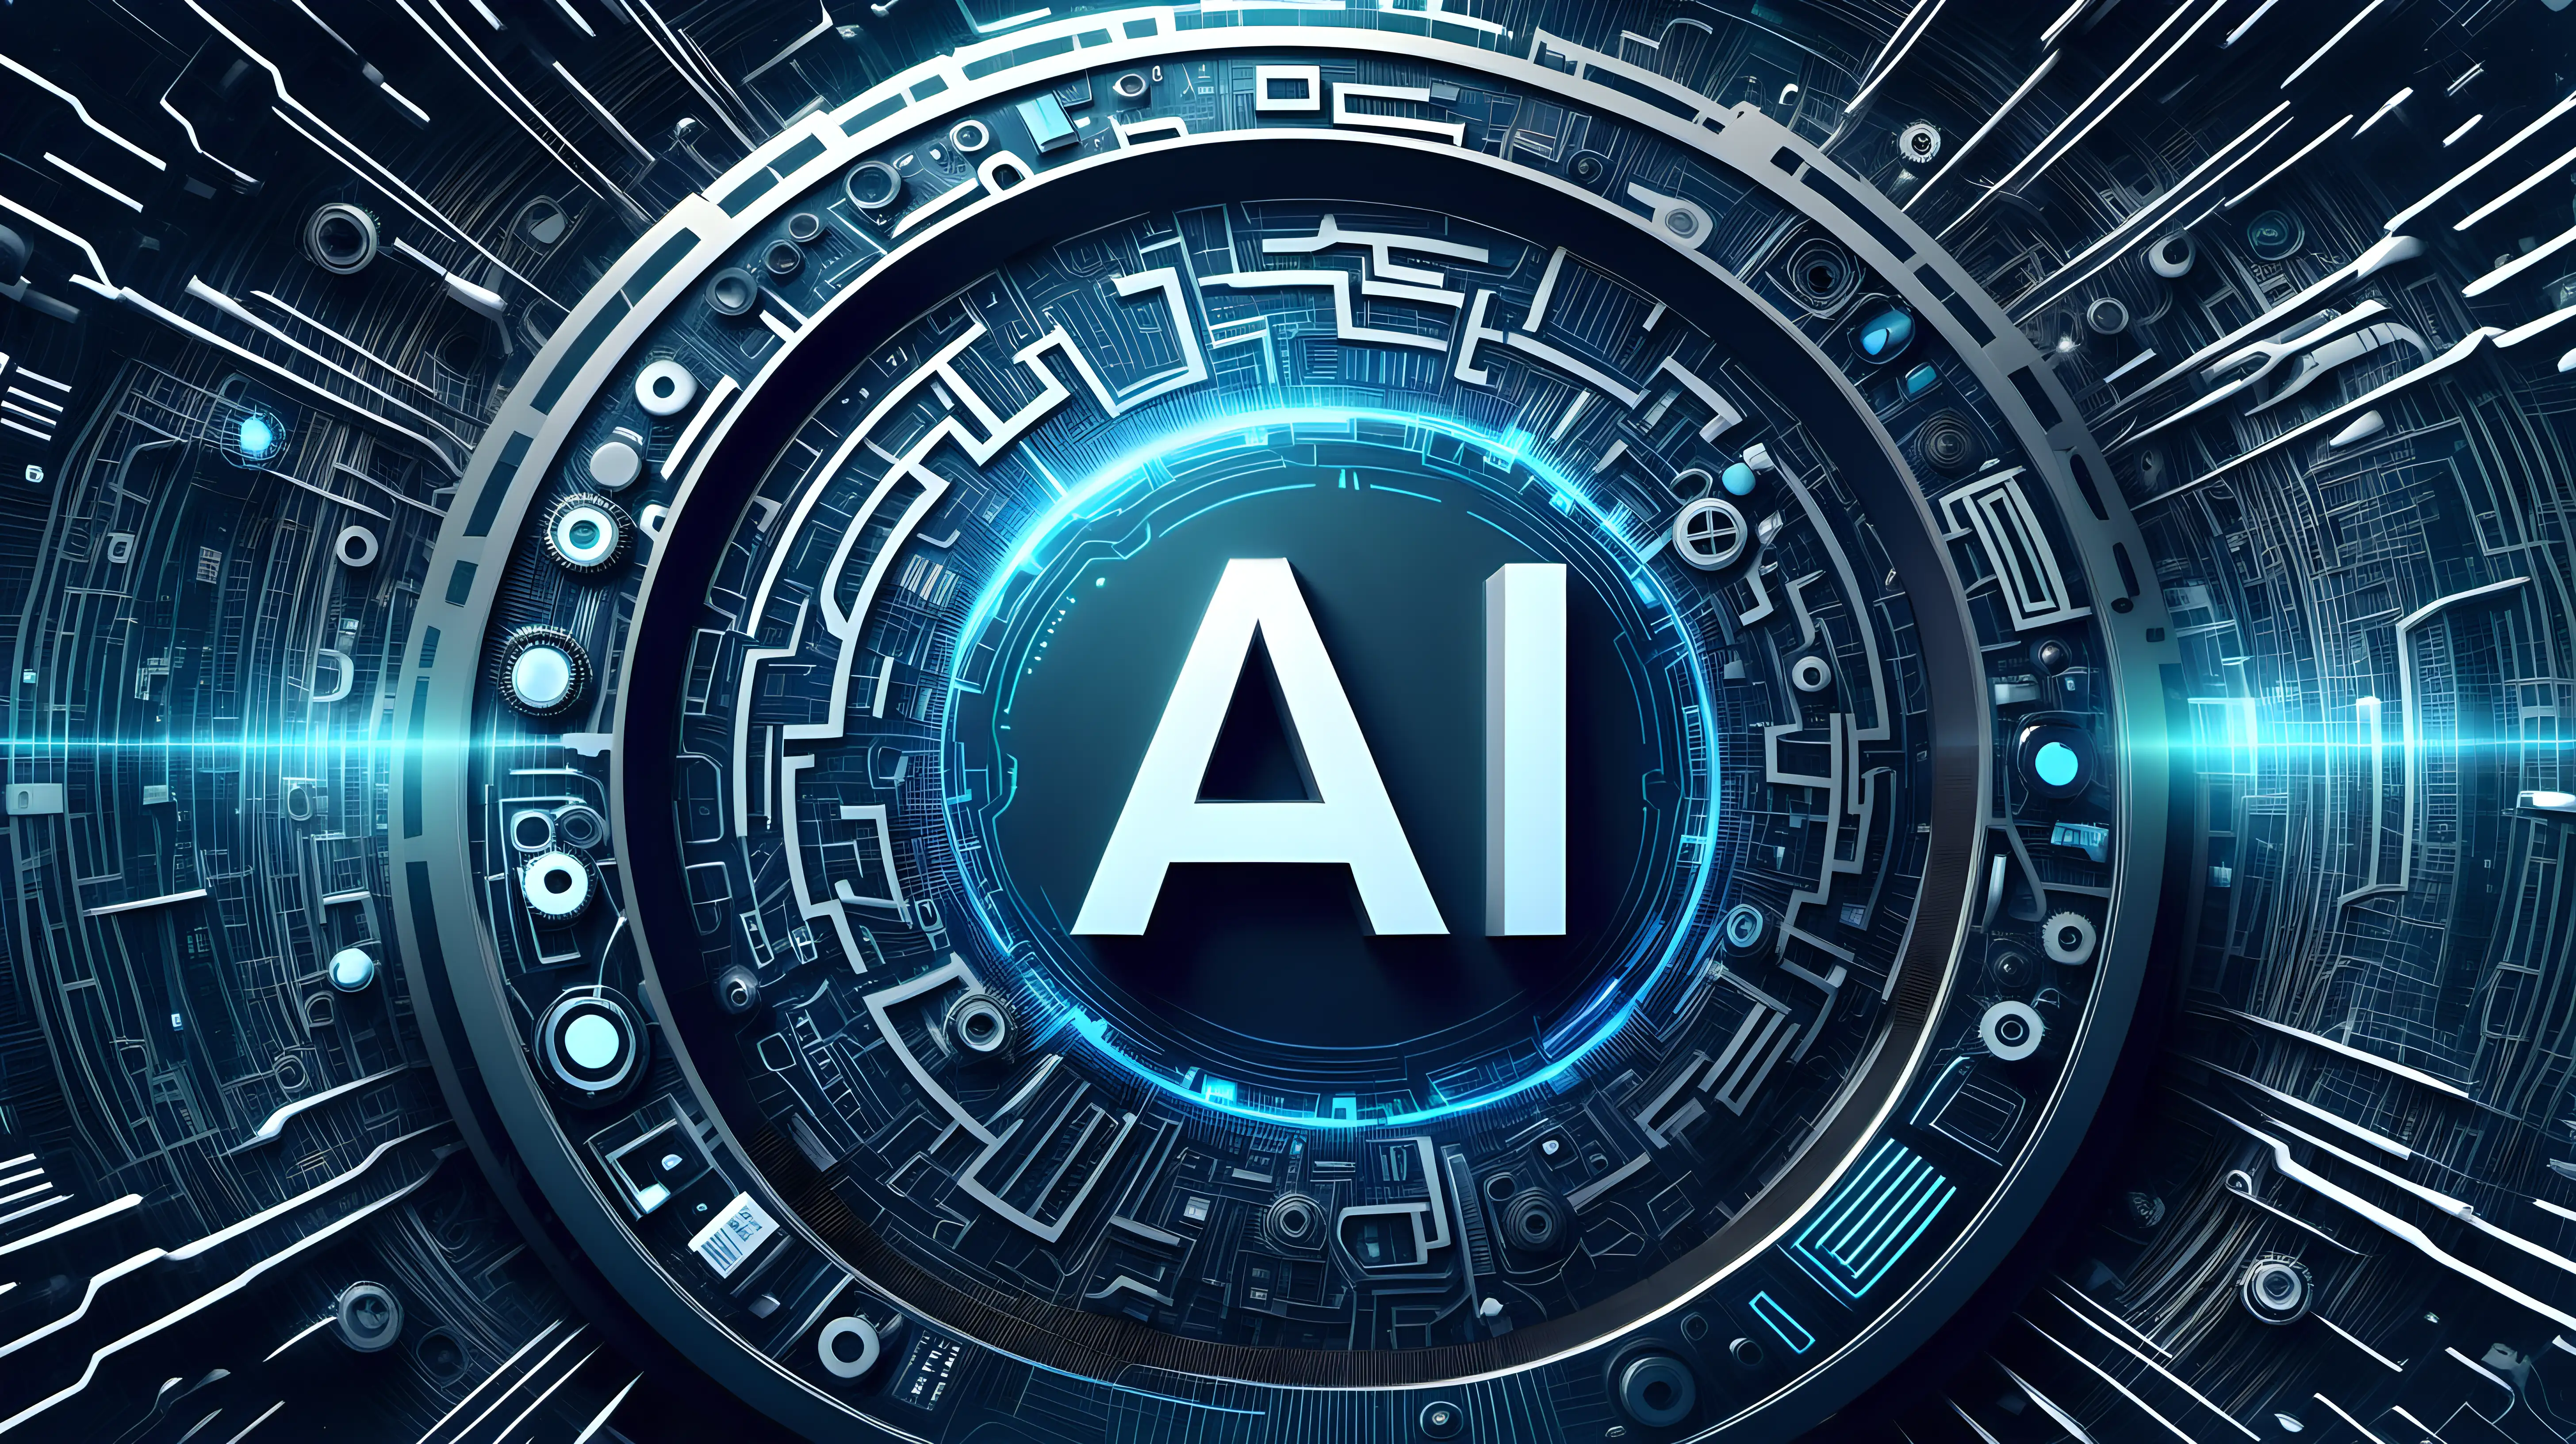 Futuristic AI Concept Digital Innovation with Central AI Text